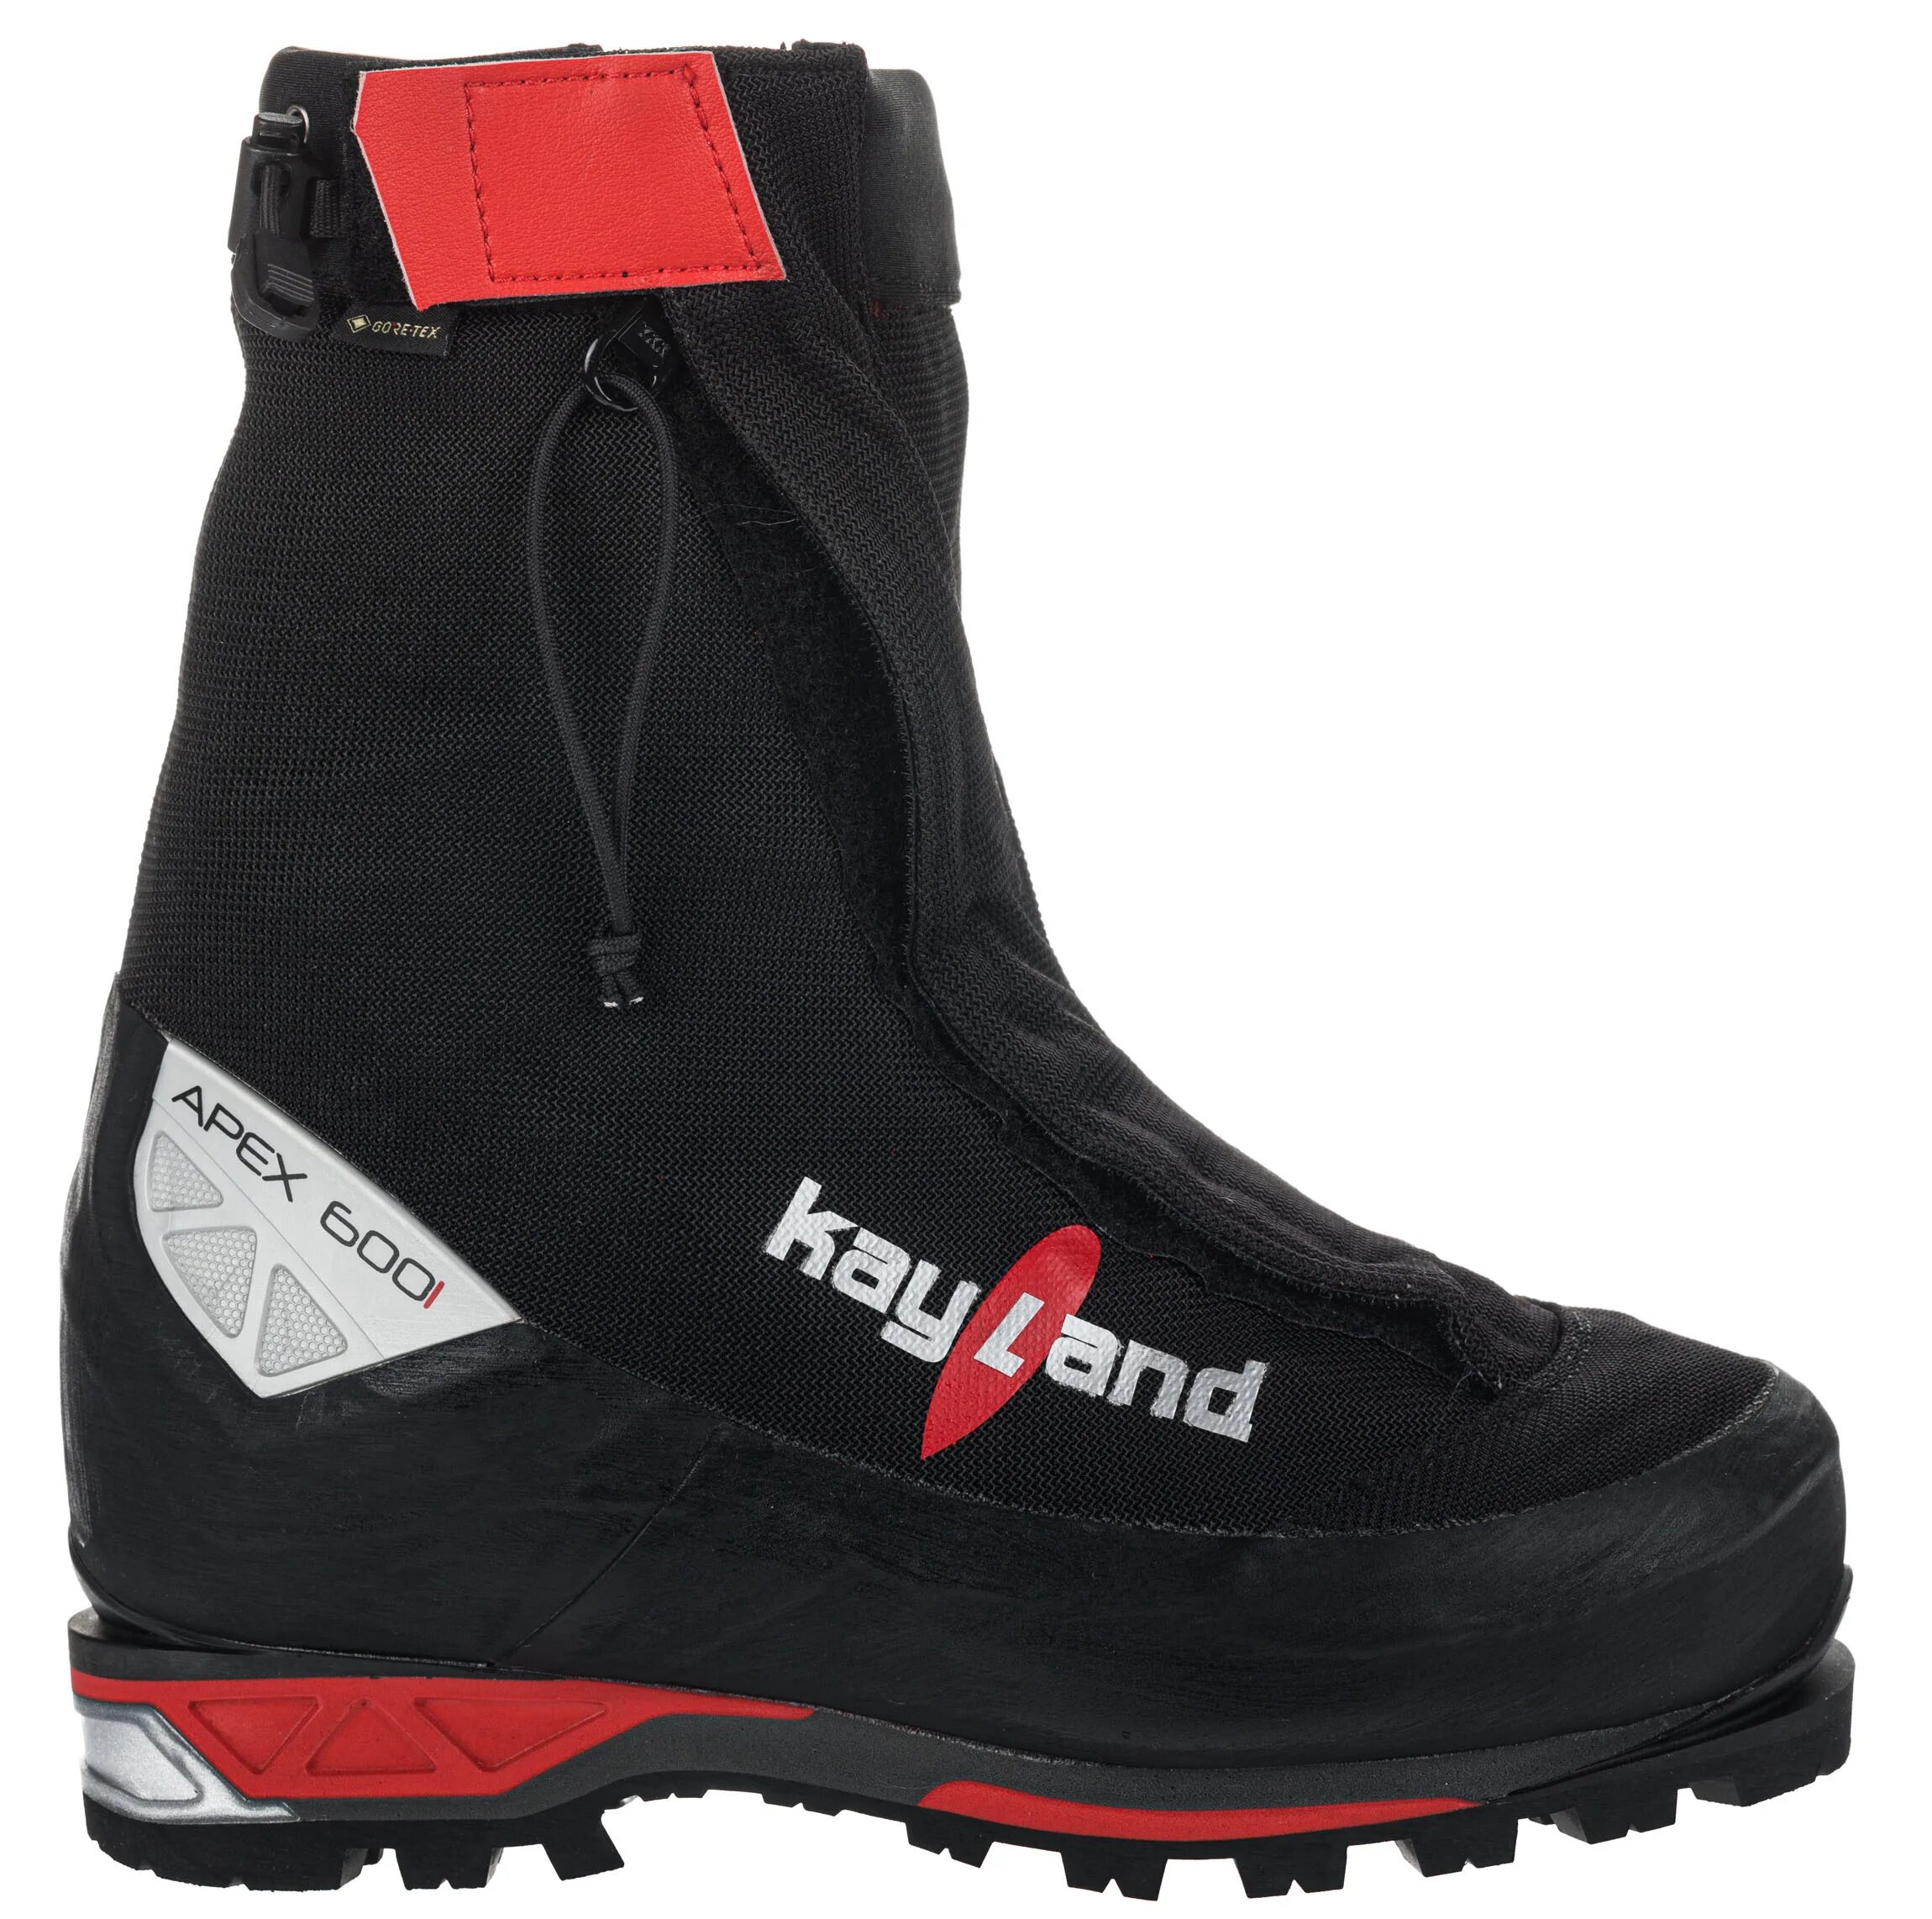 Ботинки kayland. Kayland 6001 GTX Black/Red. Kayland ботинки. Ботинки Kayland m11. Kayland ботинки Starland GTX.